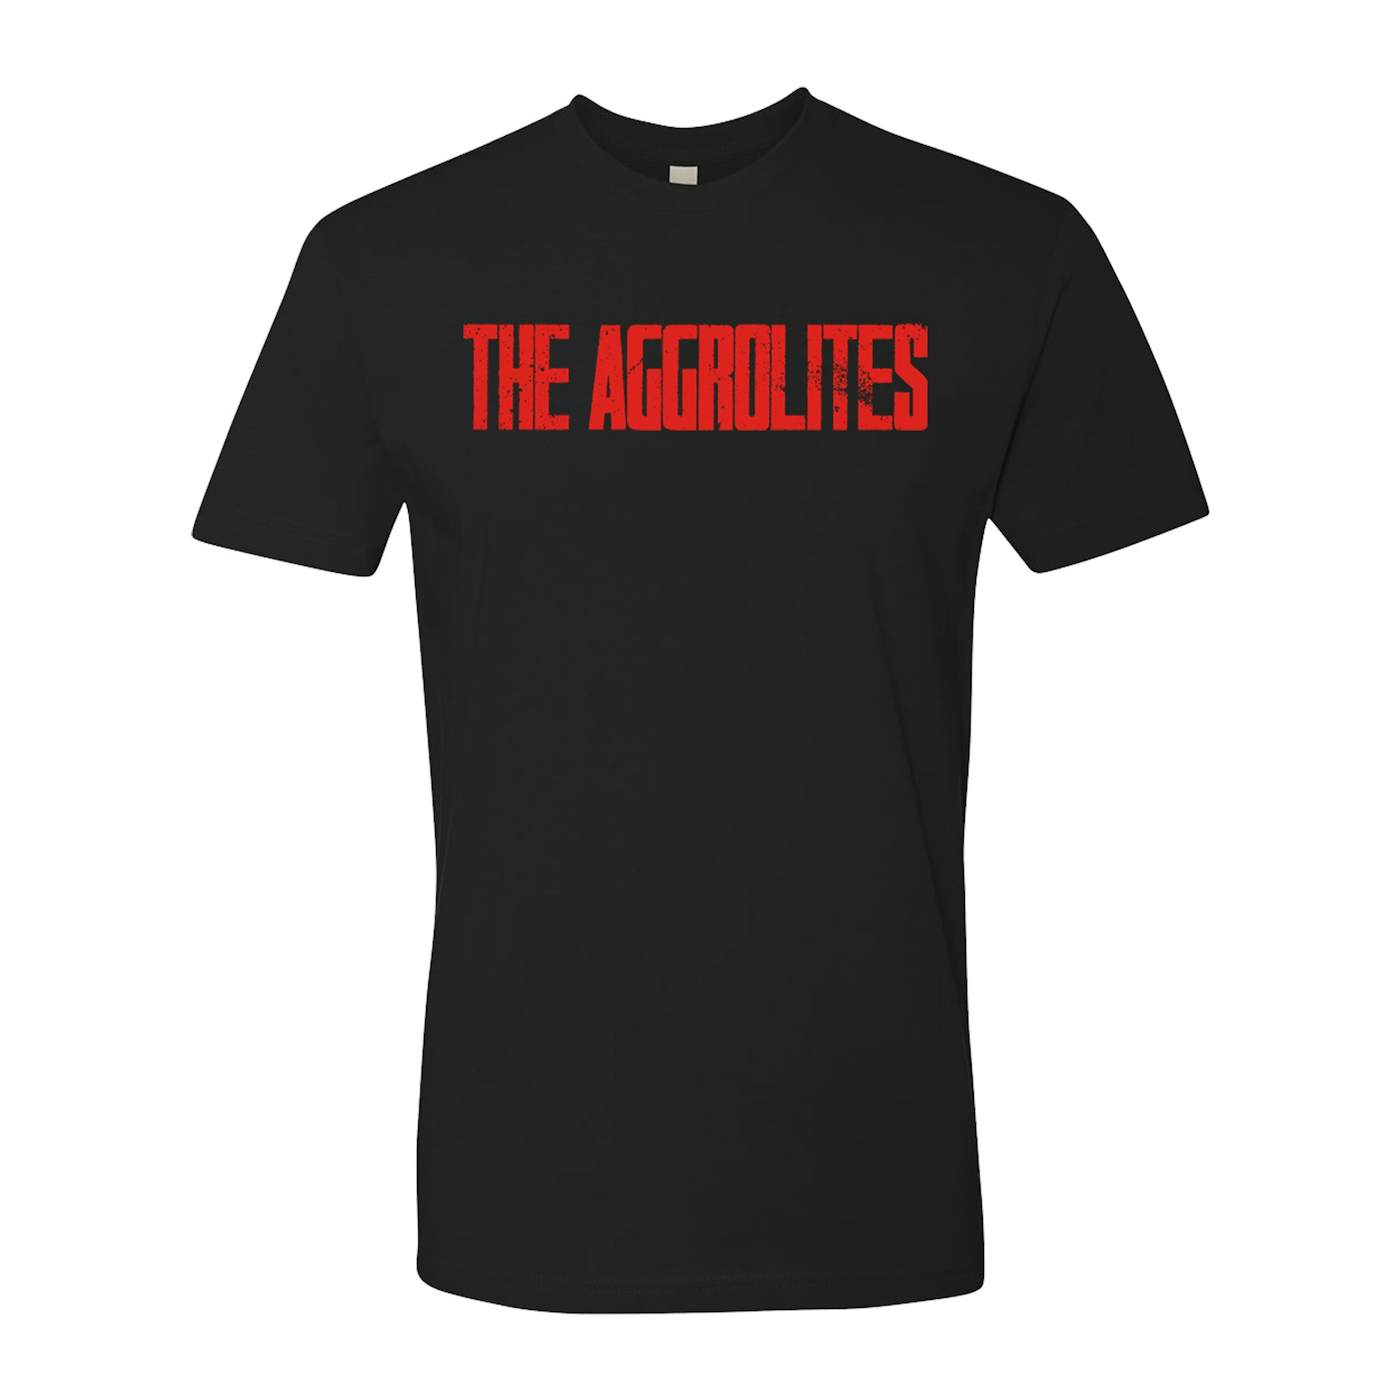 The Aggrolites - Red Text Logo - Black - T-Shirt